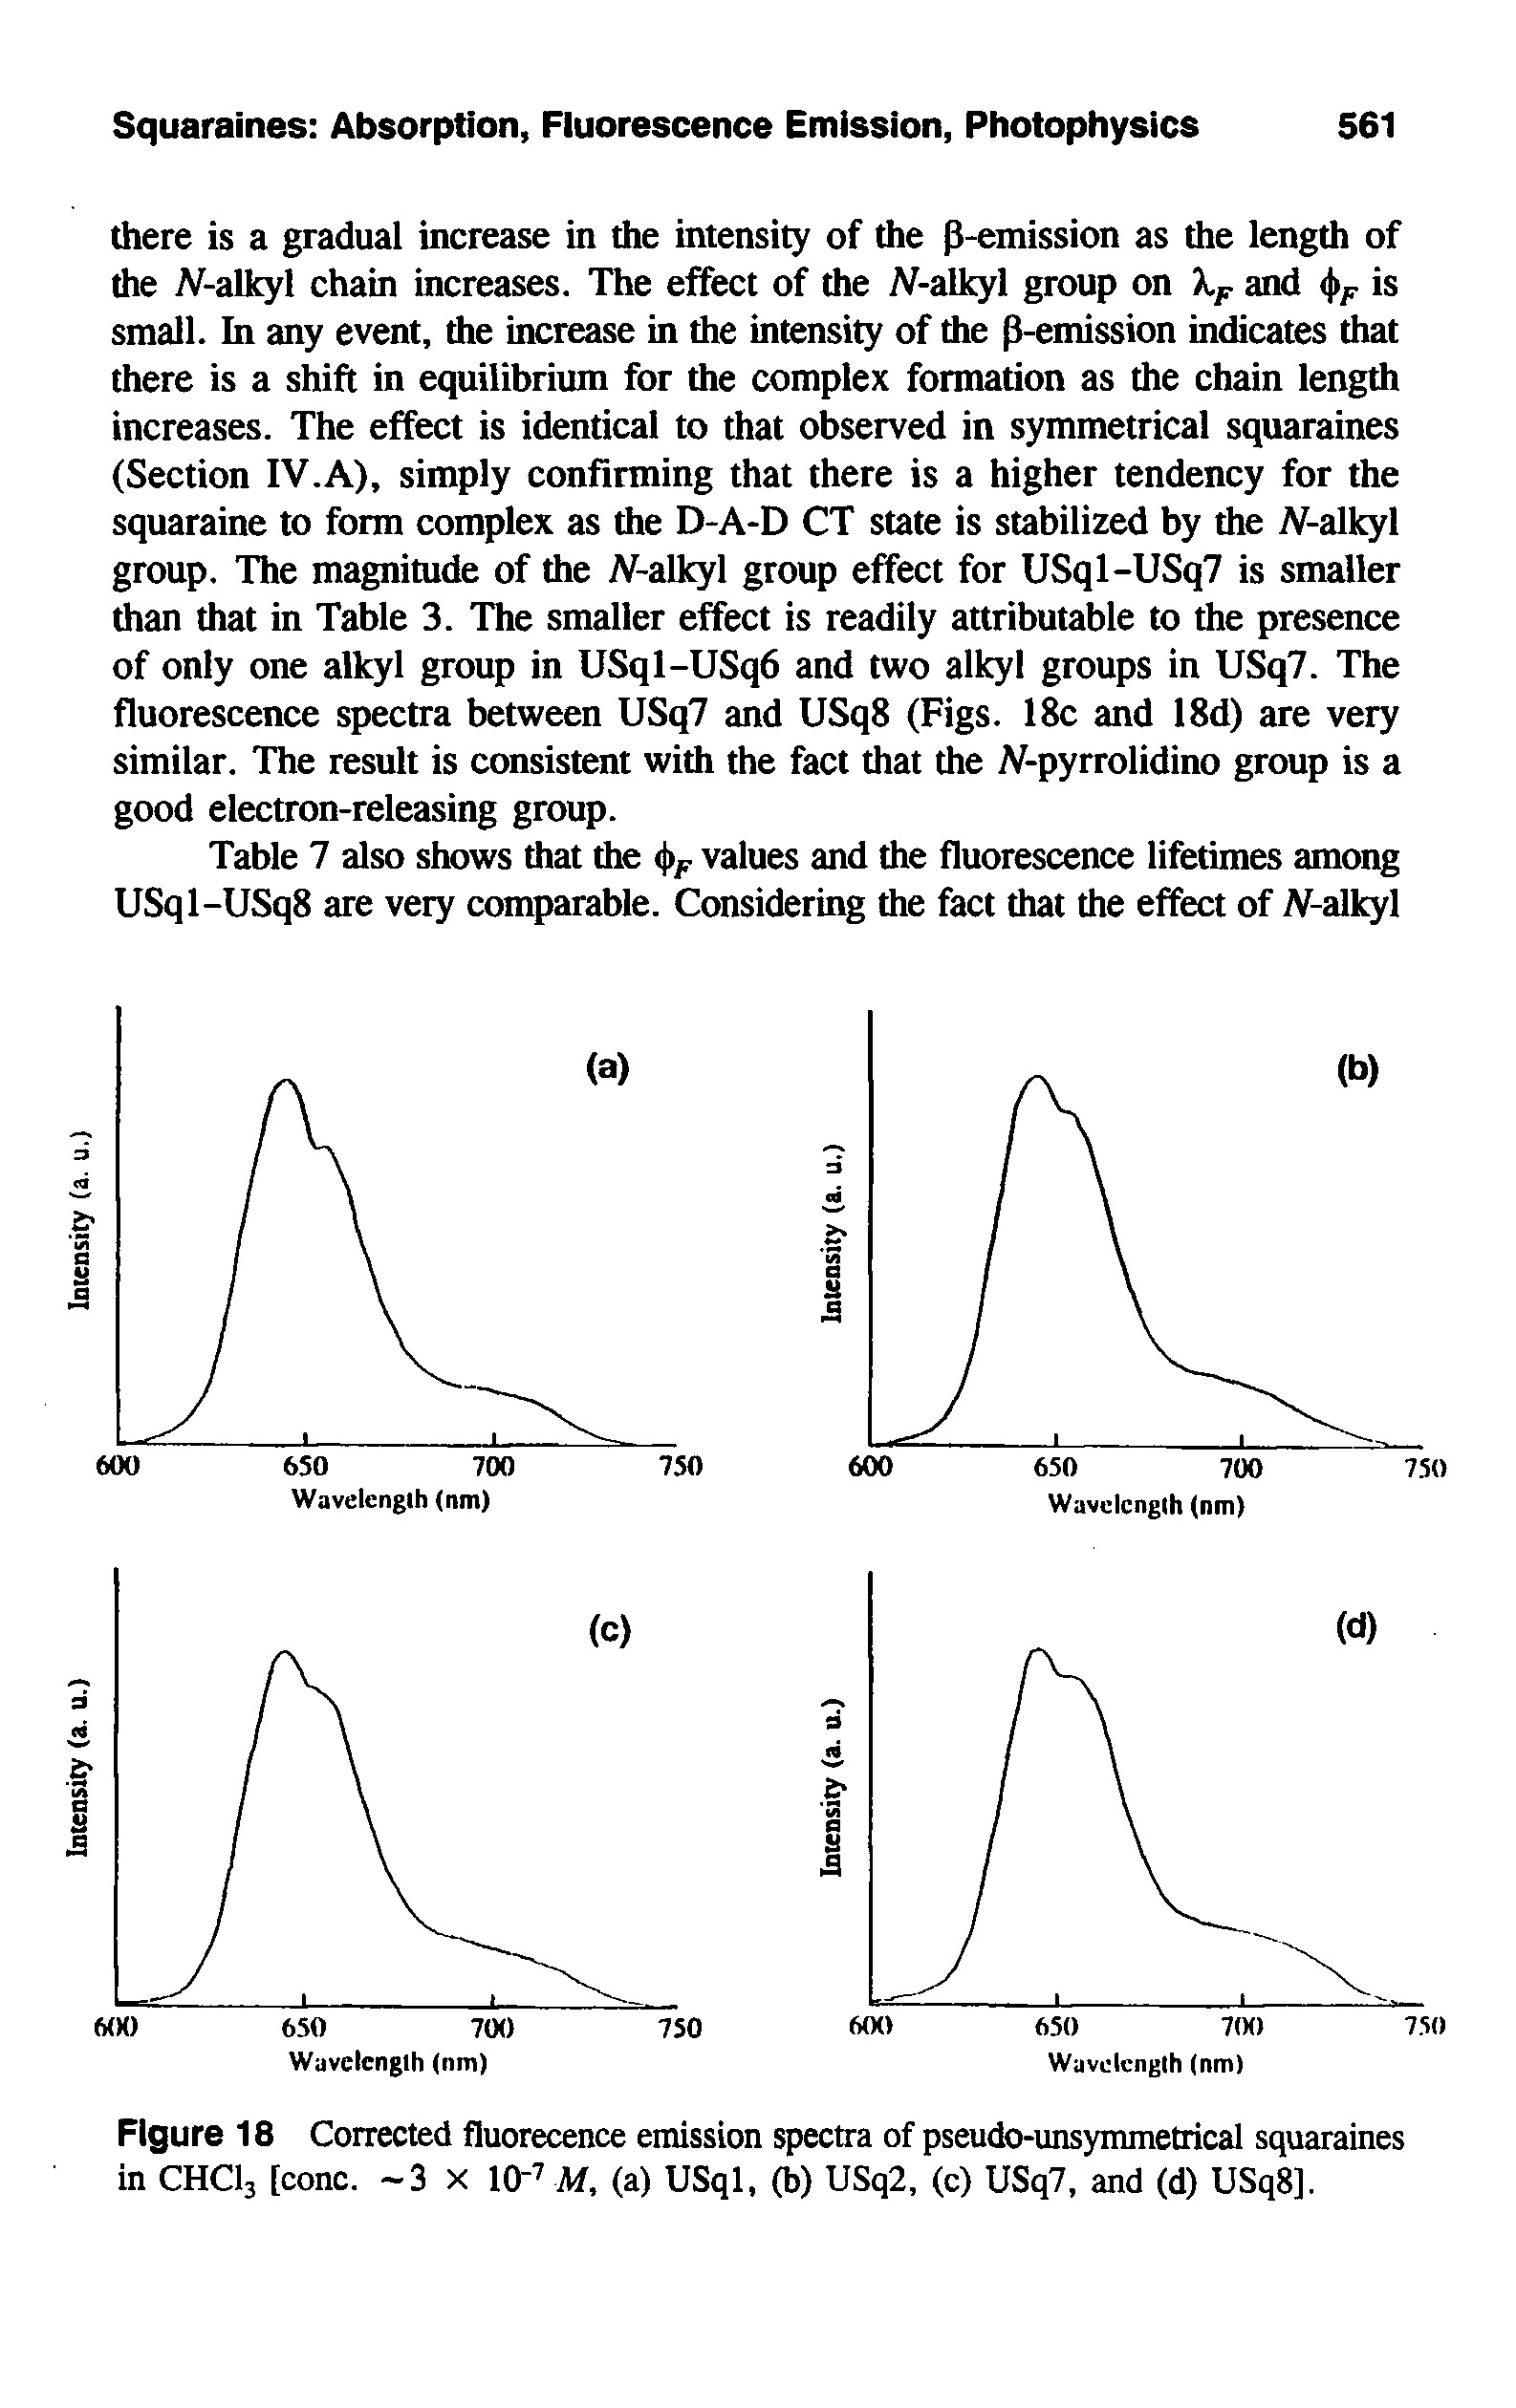 Figure 18 Corrected fluorecence emission spectra of pseudo-unsymmetrical squaraines in CHCI3 [cone. -3 x lOr M, (a) USql, (b) USq2, (c) USq7, and (d) USq8],...